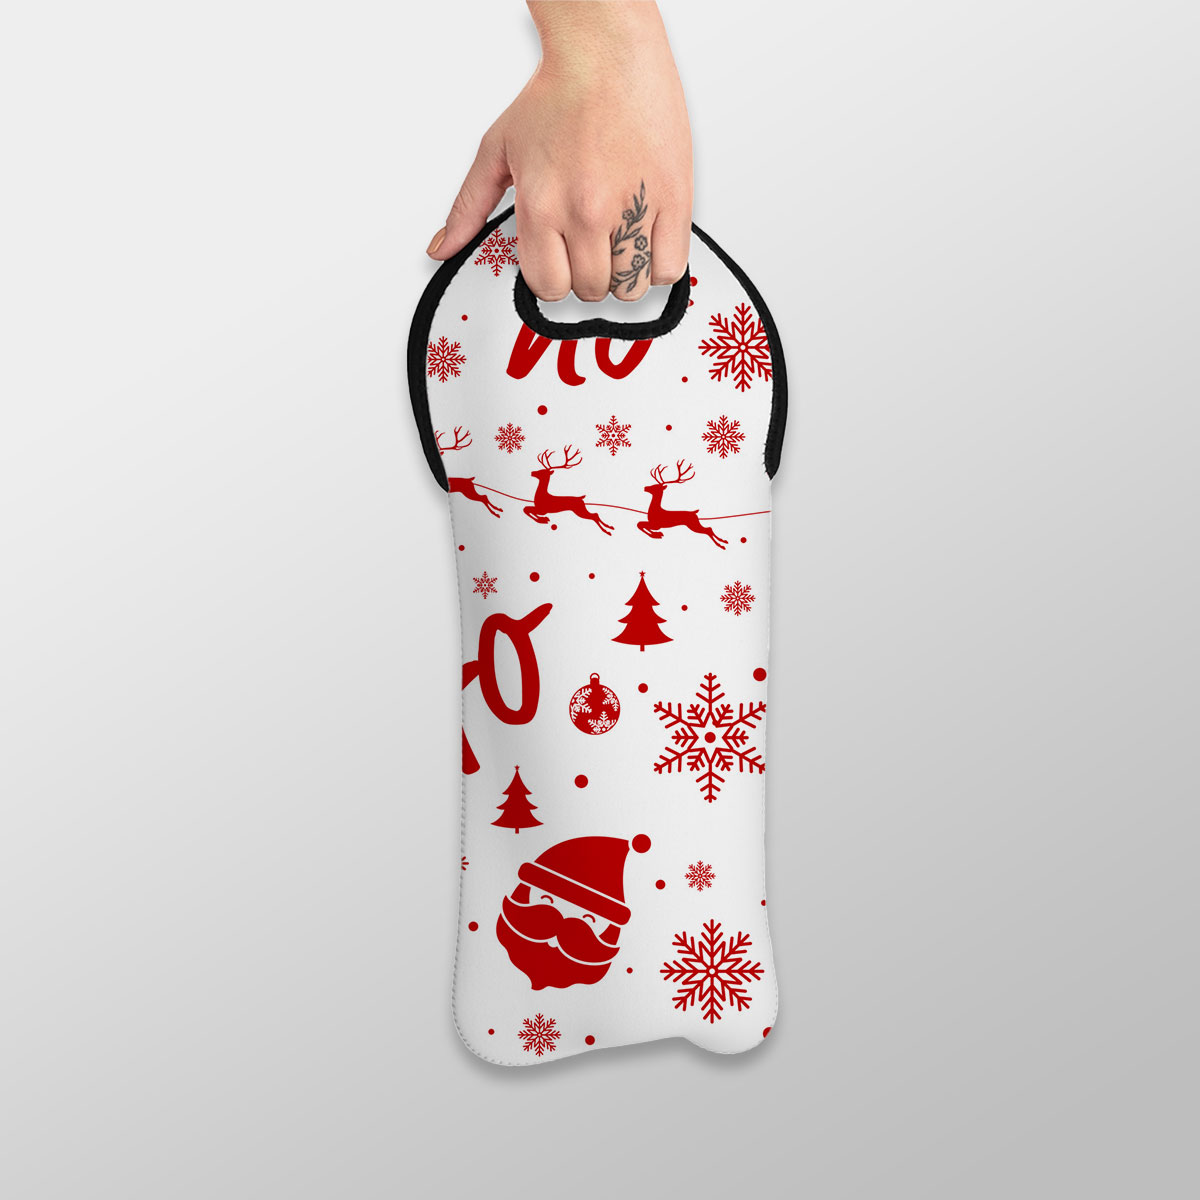 Santa Claus, Santas Reindeer And Christmas Sleigh On The Snowflake Background Wine Tote Bag